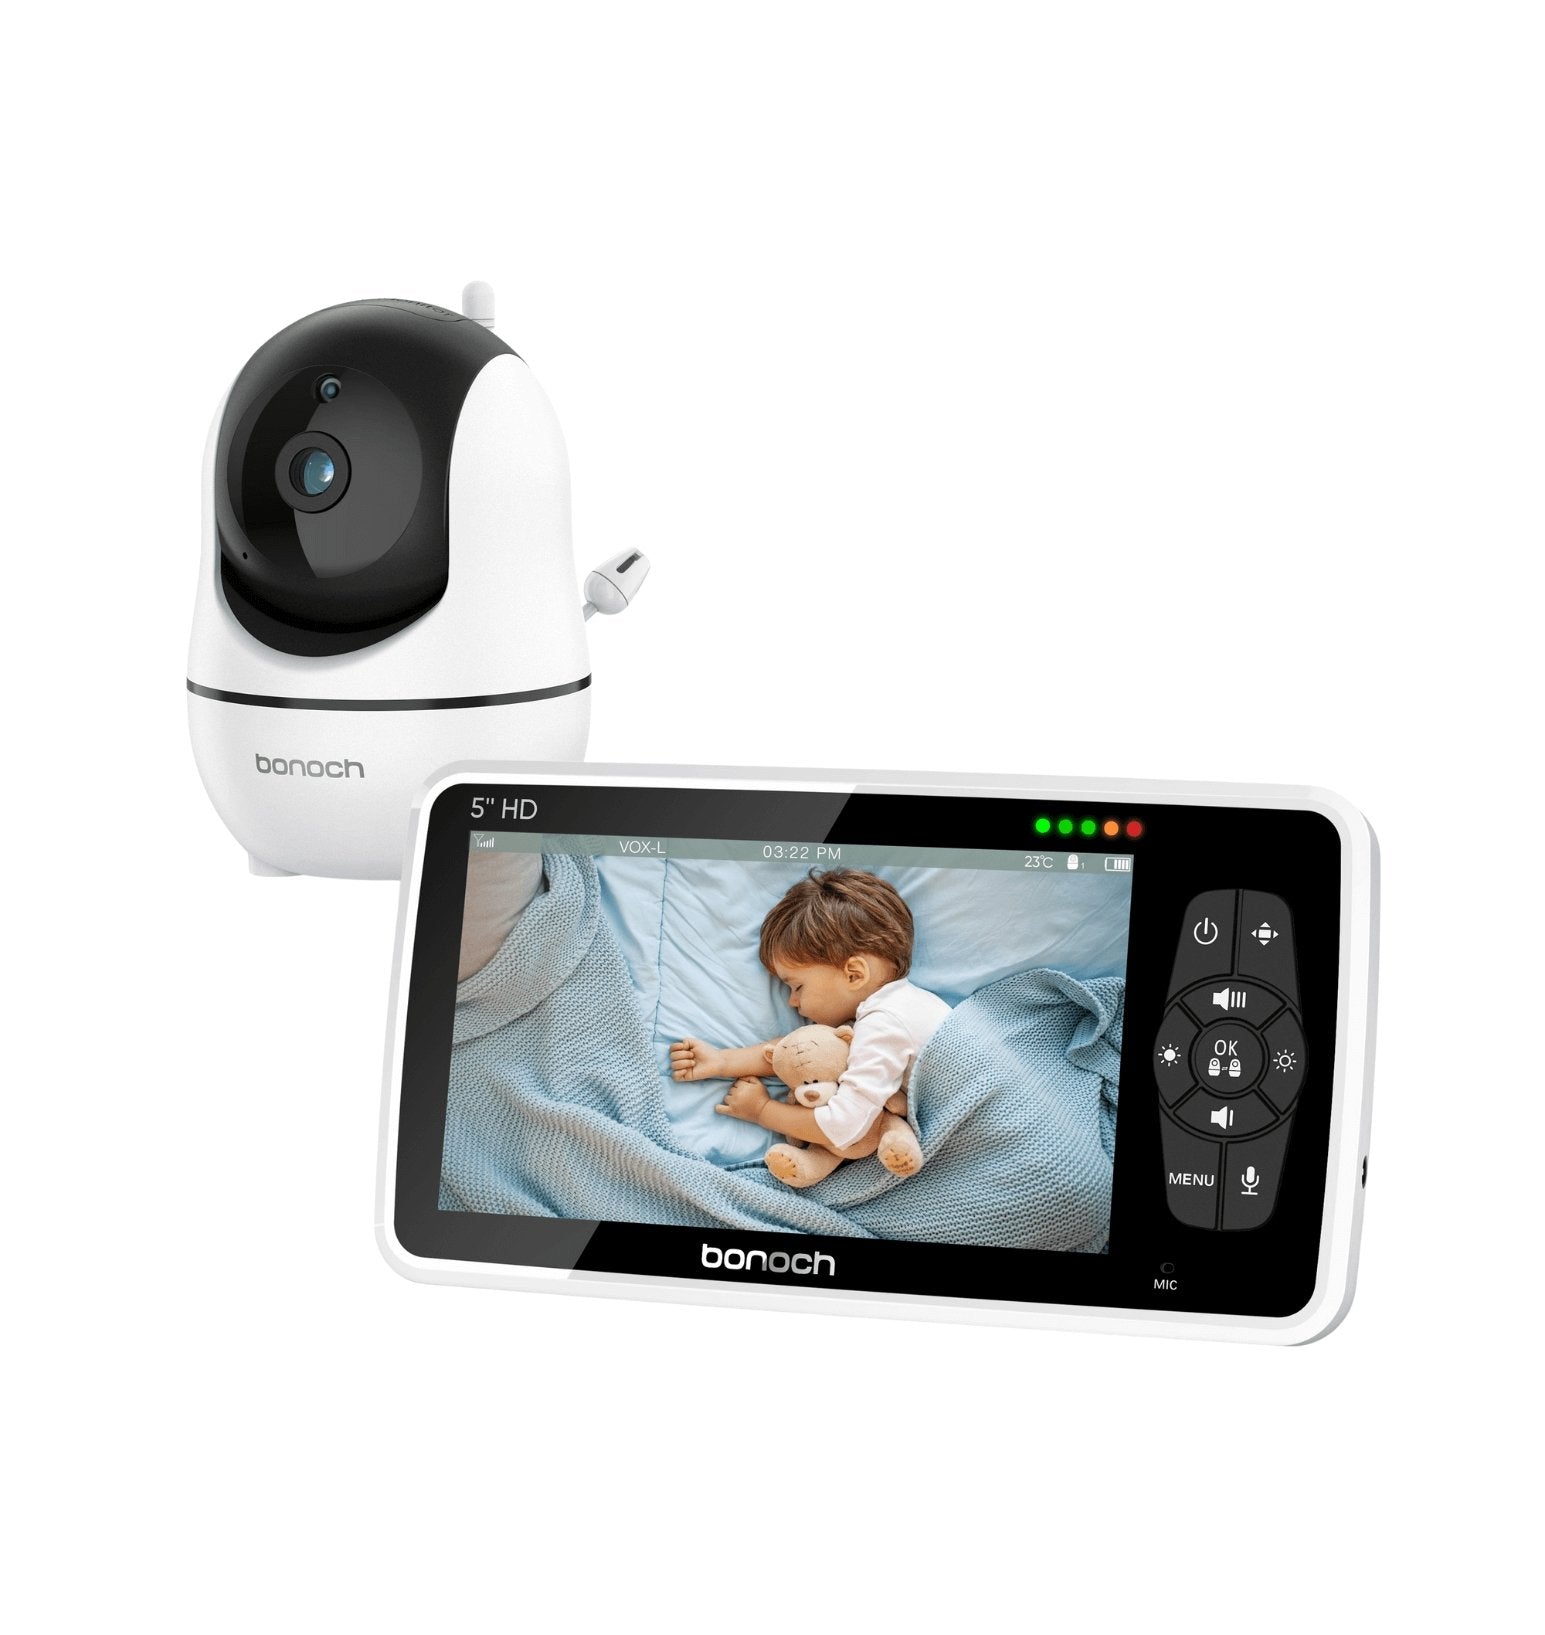 bonoch Video Baby Monitor 5'' 720P - bonoch